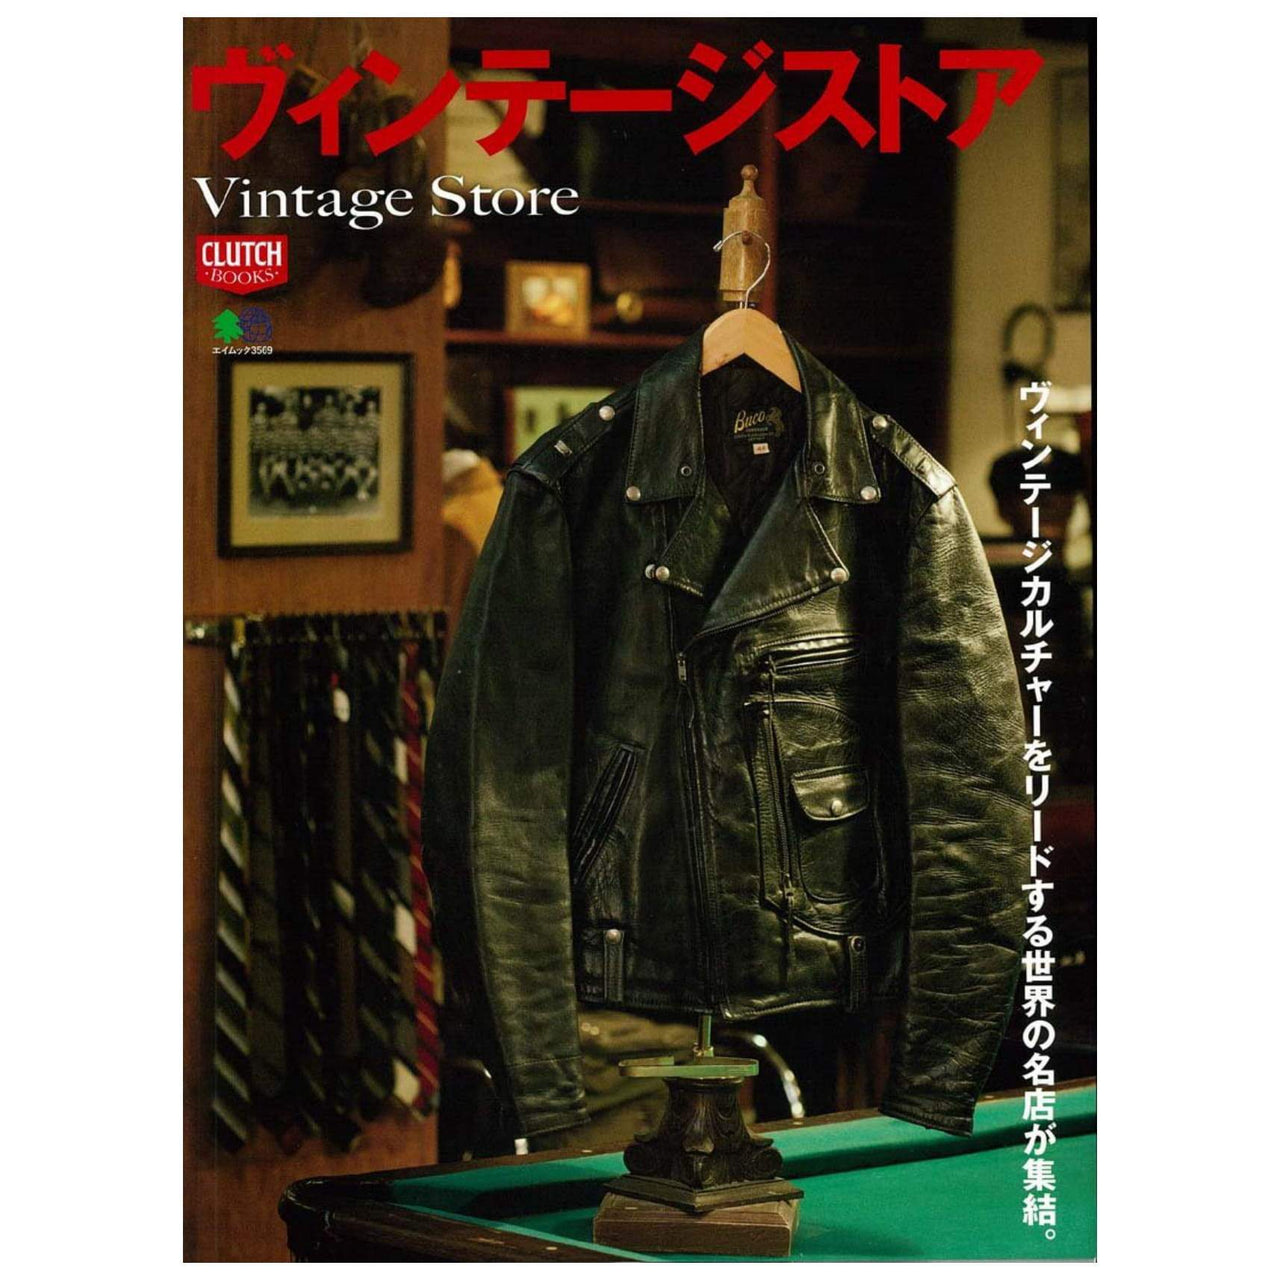 Clutch Books "VINTAGE STORE"-Magazine-Clutch Cafe